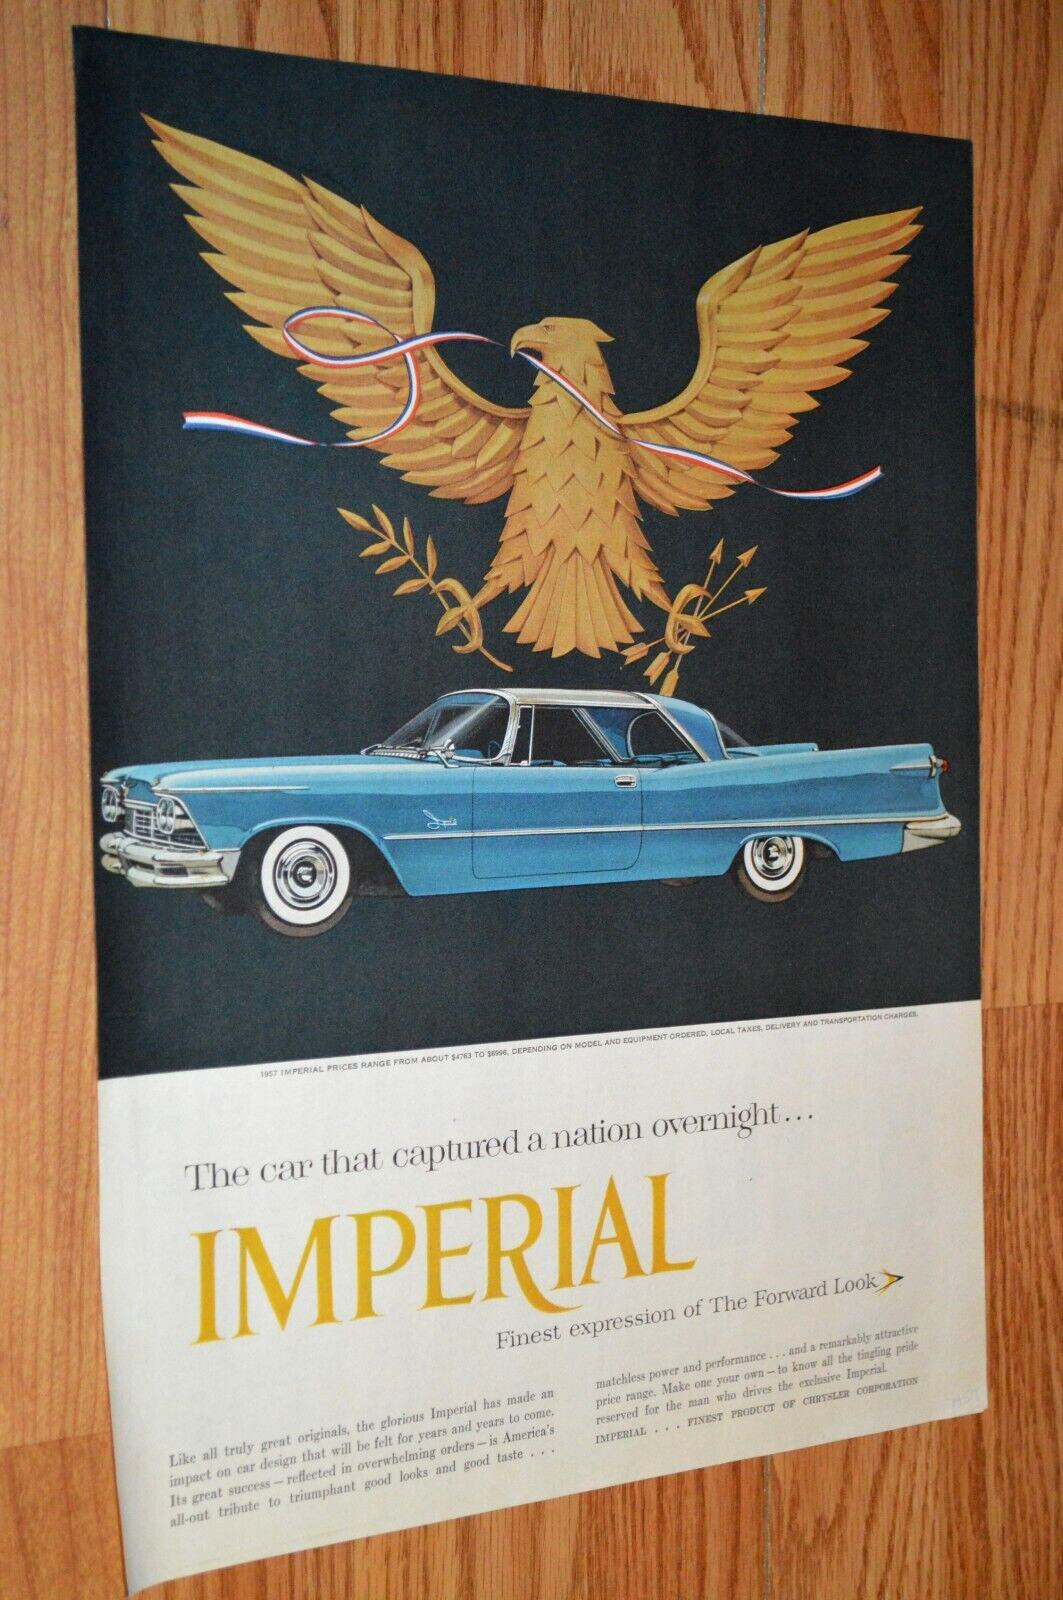 ★1957 IMPERIAL ORIGINAL LARGE VINTAGE ADVERTISEMENT PRINT AD 57 CHRYSLER BLUE